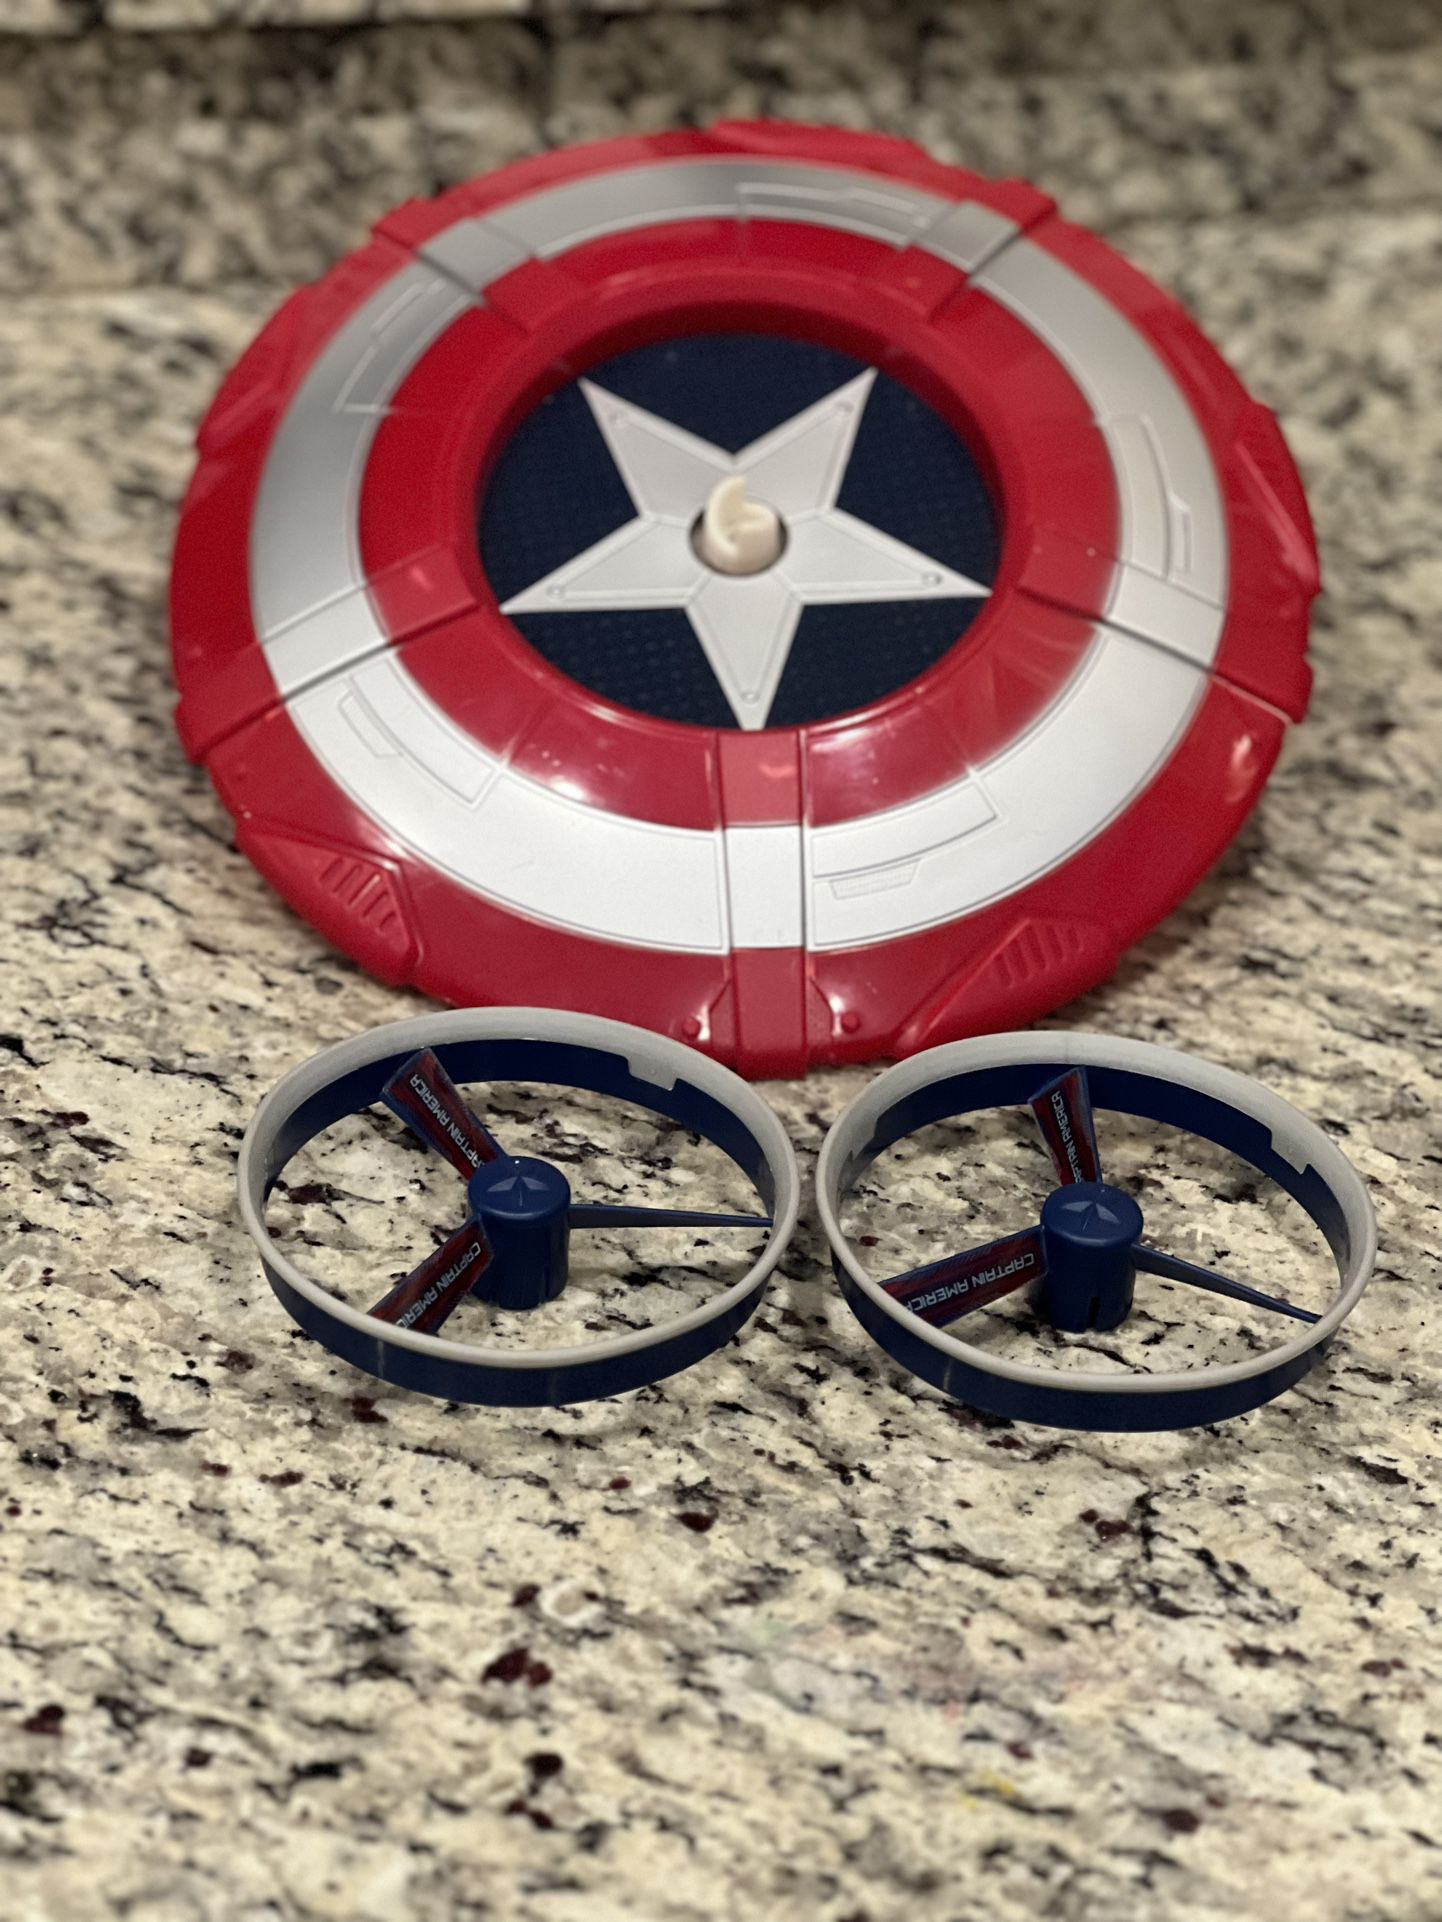 Captain America Shield Toy